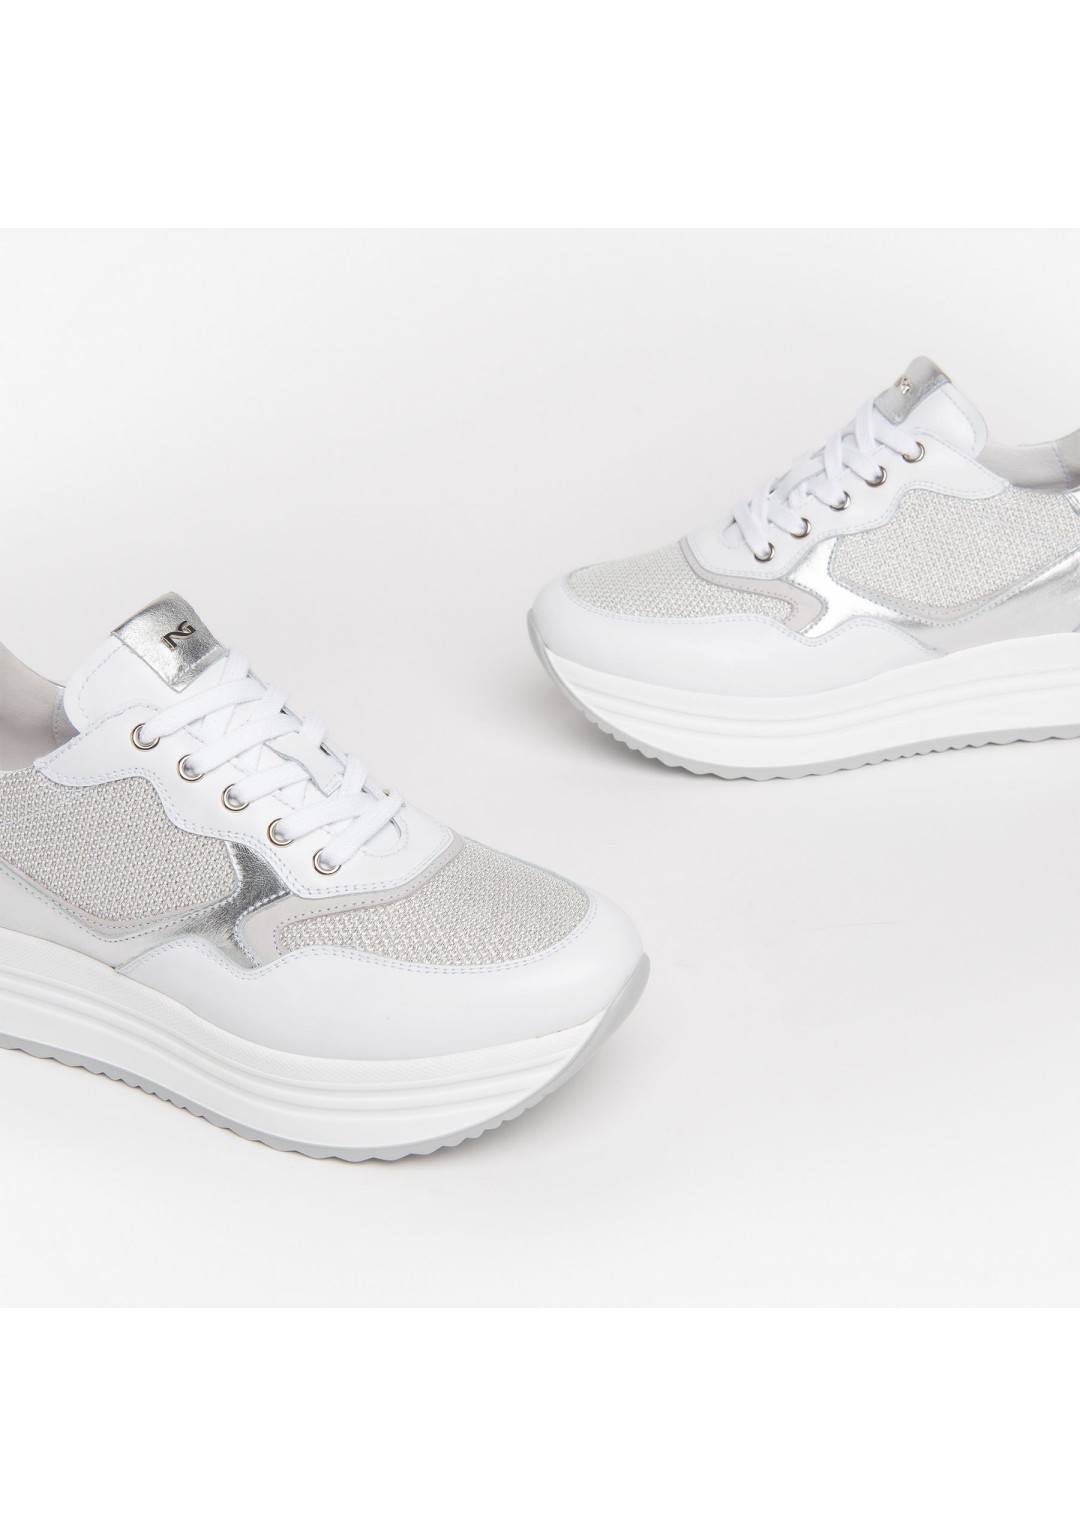 NEROGIARDINI - Sneakers Platform - Donna - 377D